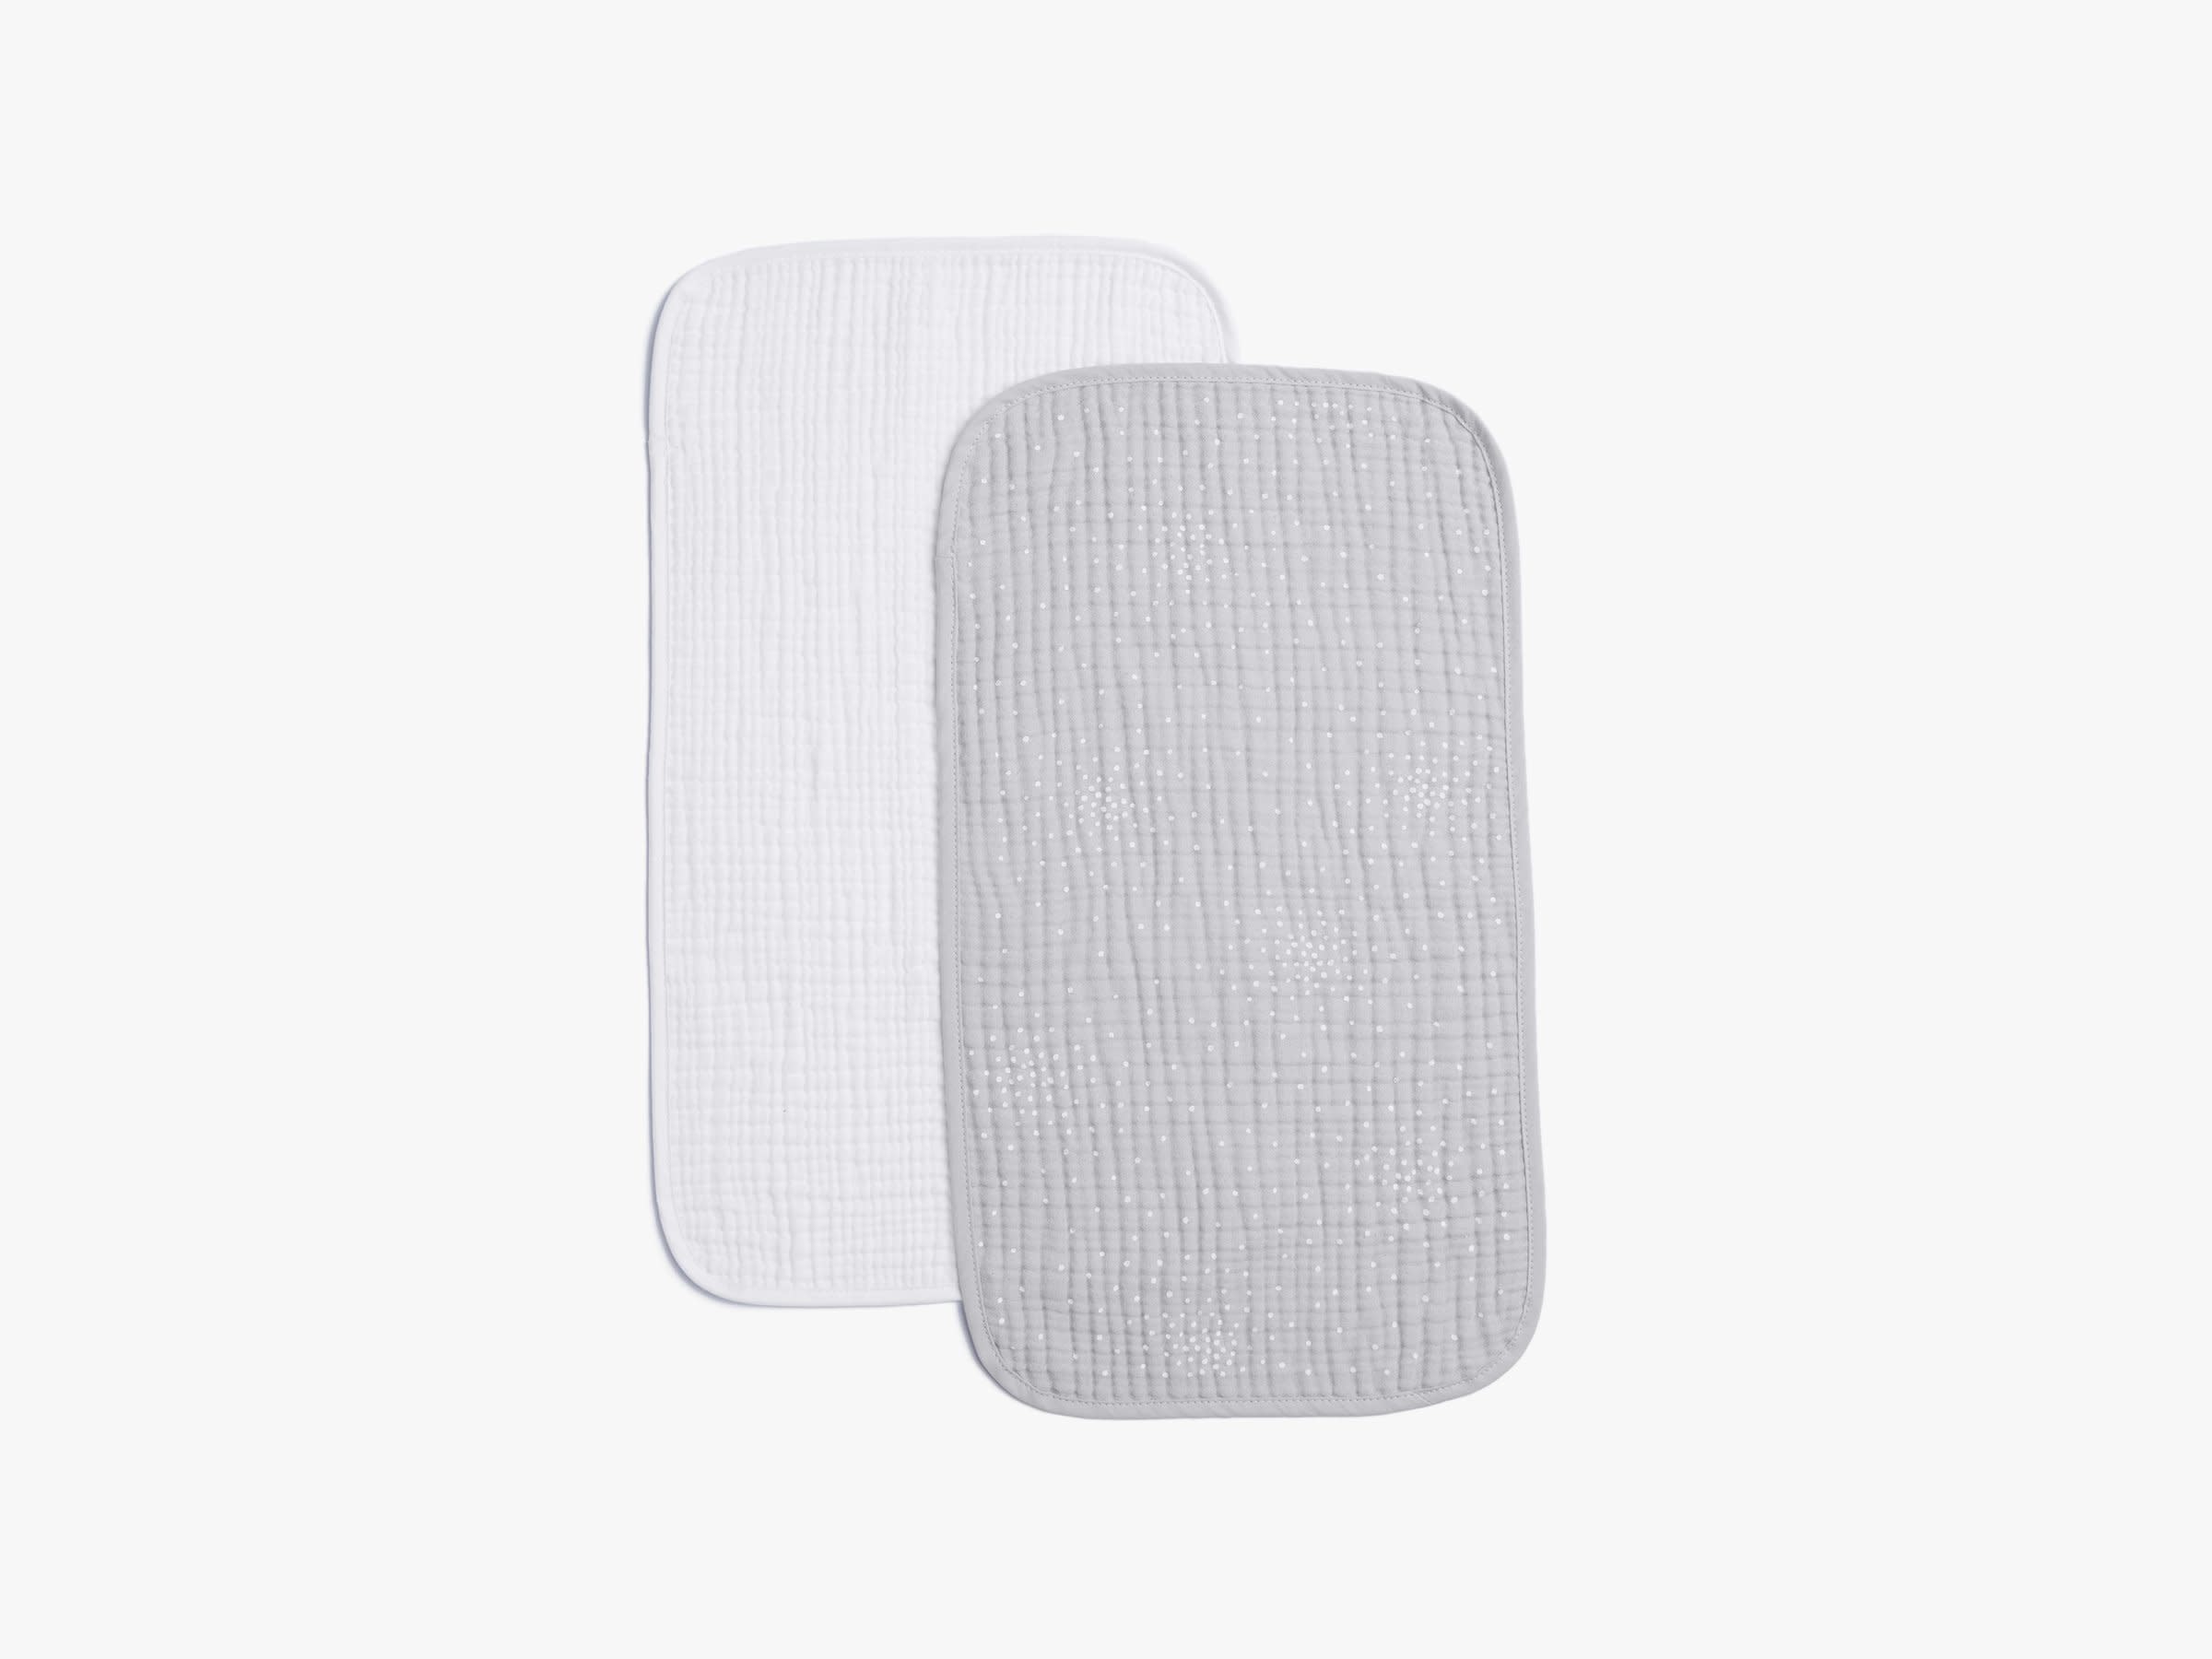 Grey And White Burp Cloth Set Product Image